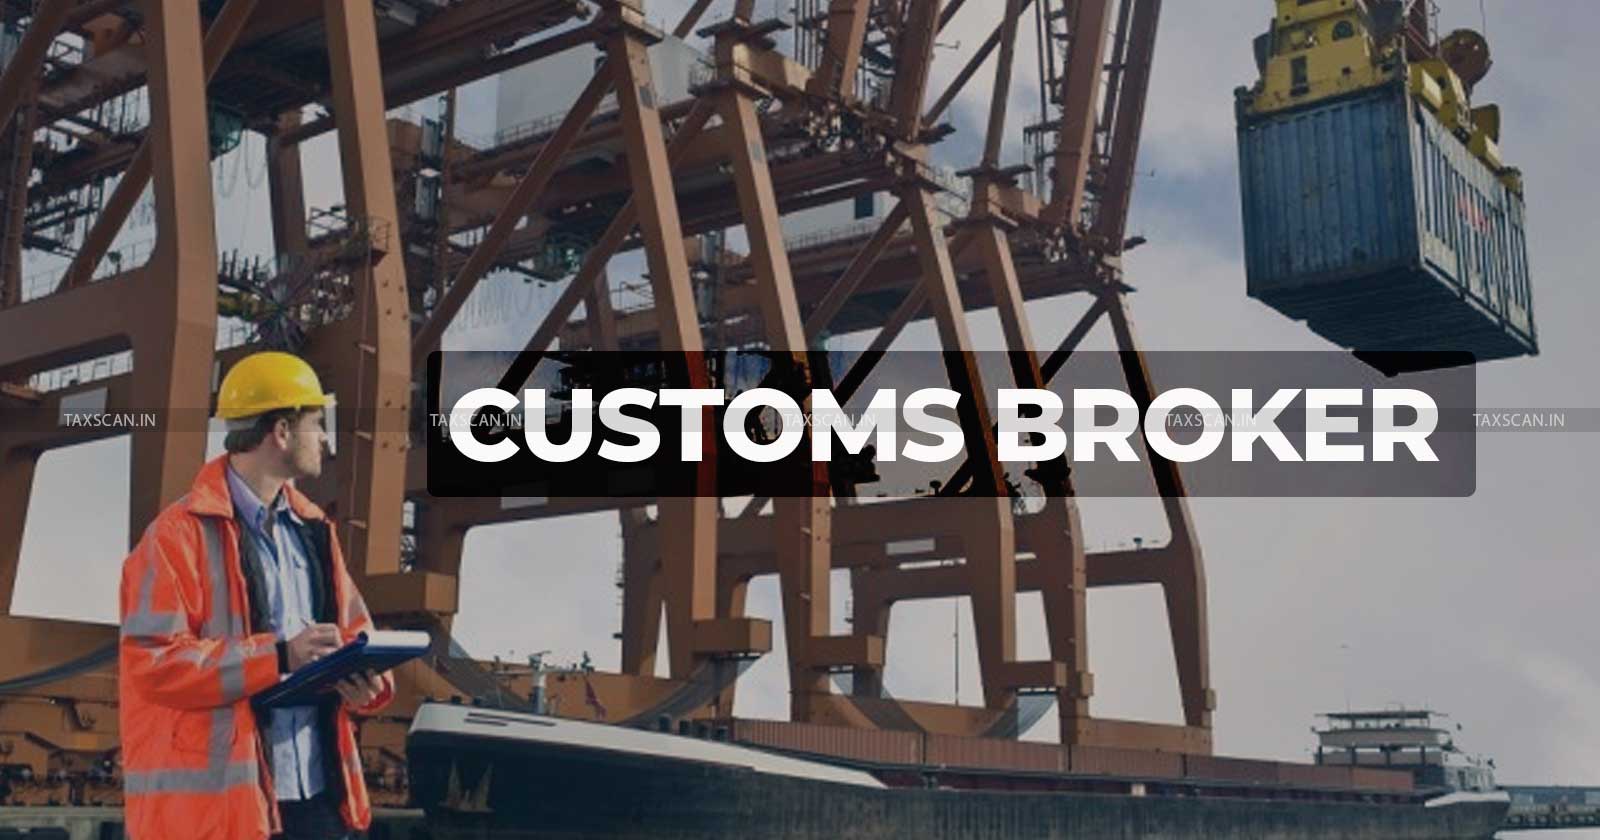 CESTAT New Delhi - Customs Broker Liability - Cargo Clearance Customs - Customs Clearance Legalities - CESTAT Decisions on Import - Taxscan